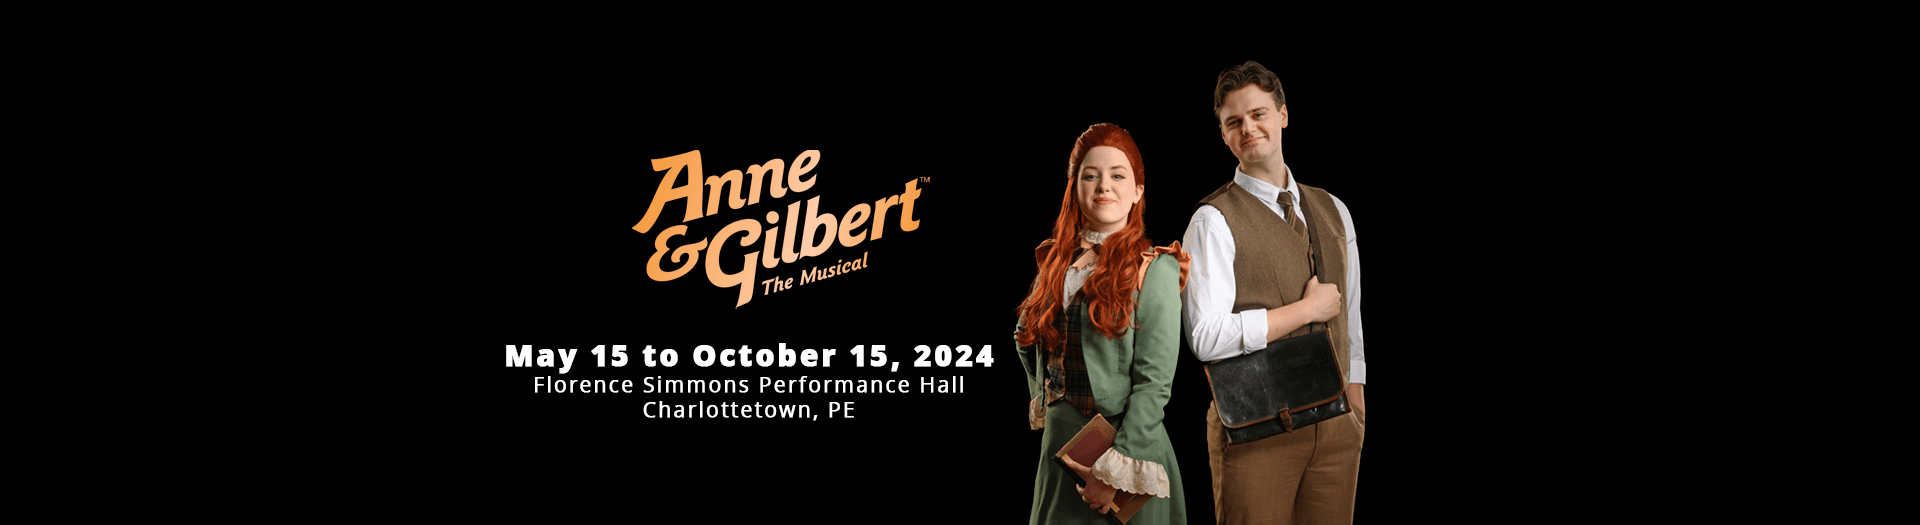 Anne & Gilbert: The Musical, Florence Simmons Performance Hall, Charlottetown, PE